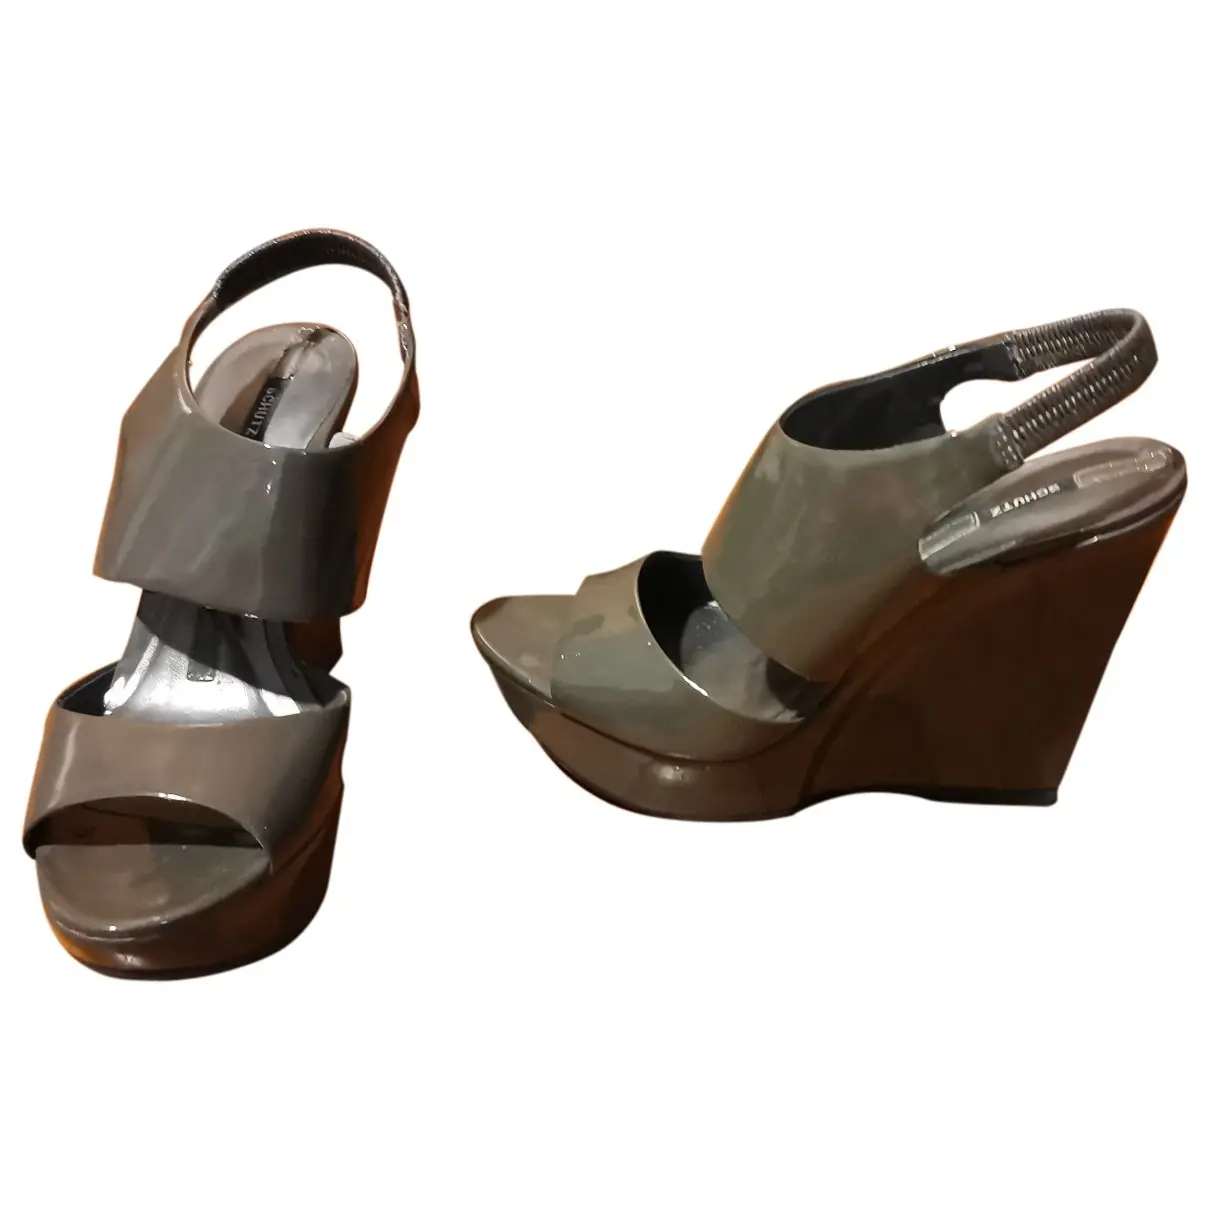 Patent leather sandals Schutz